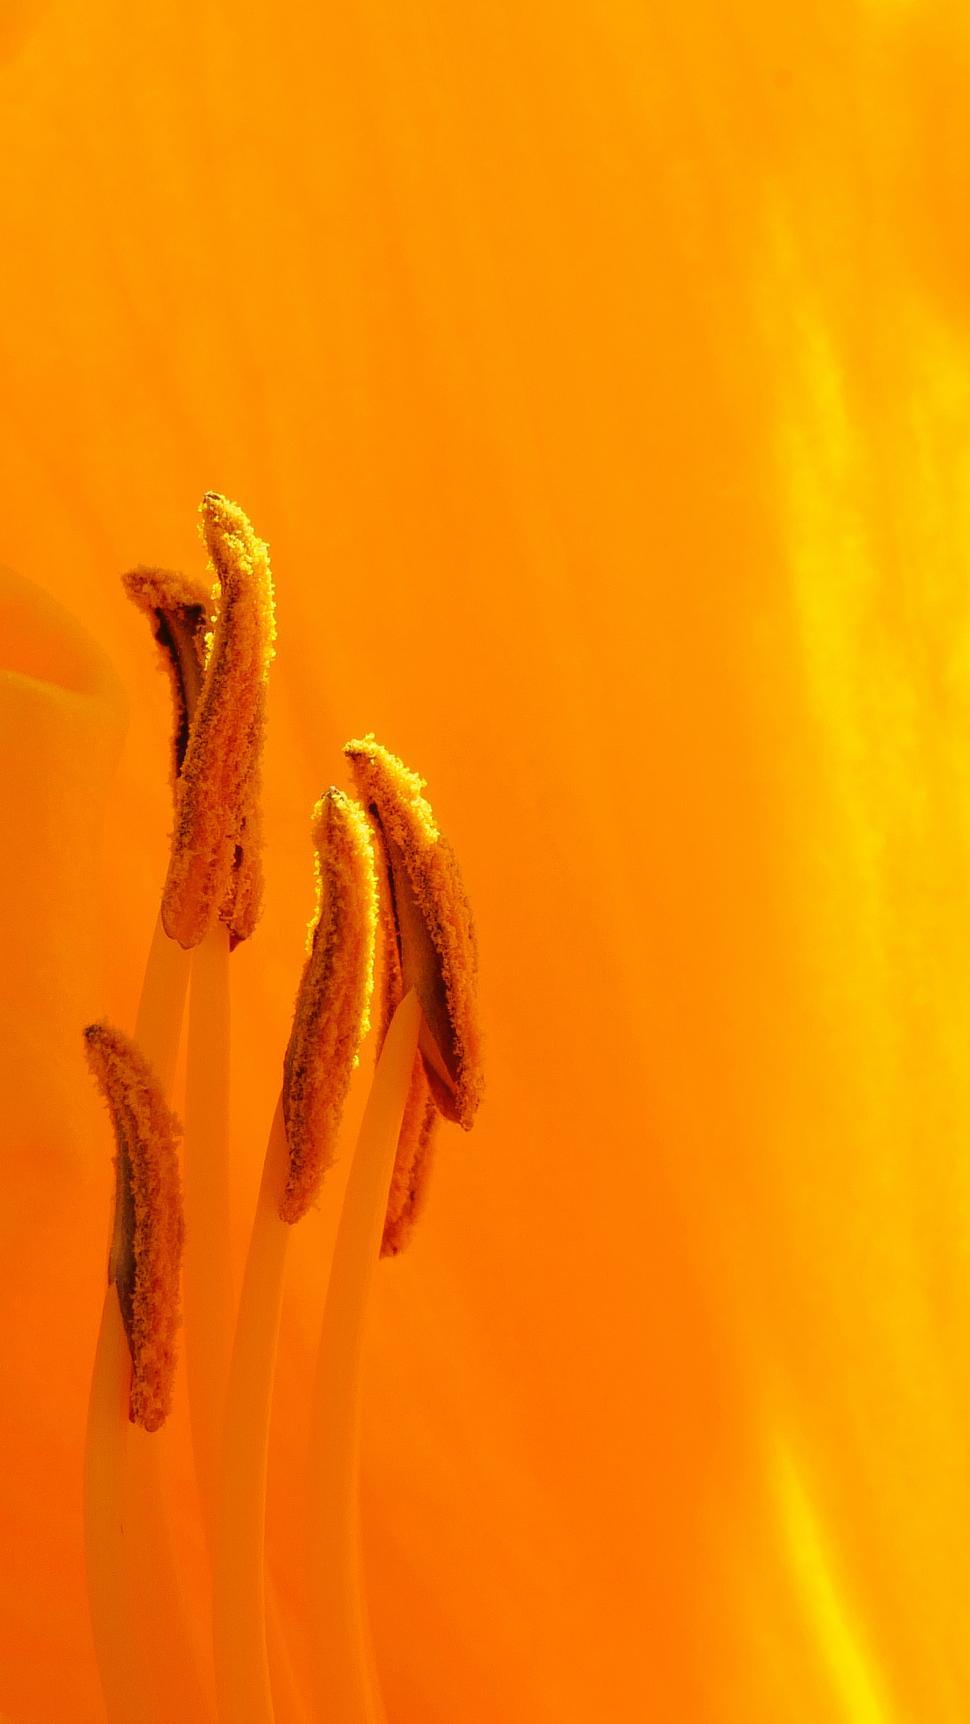 Free Image of Orange Day Lily Flower Parts Macro 